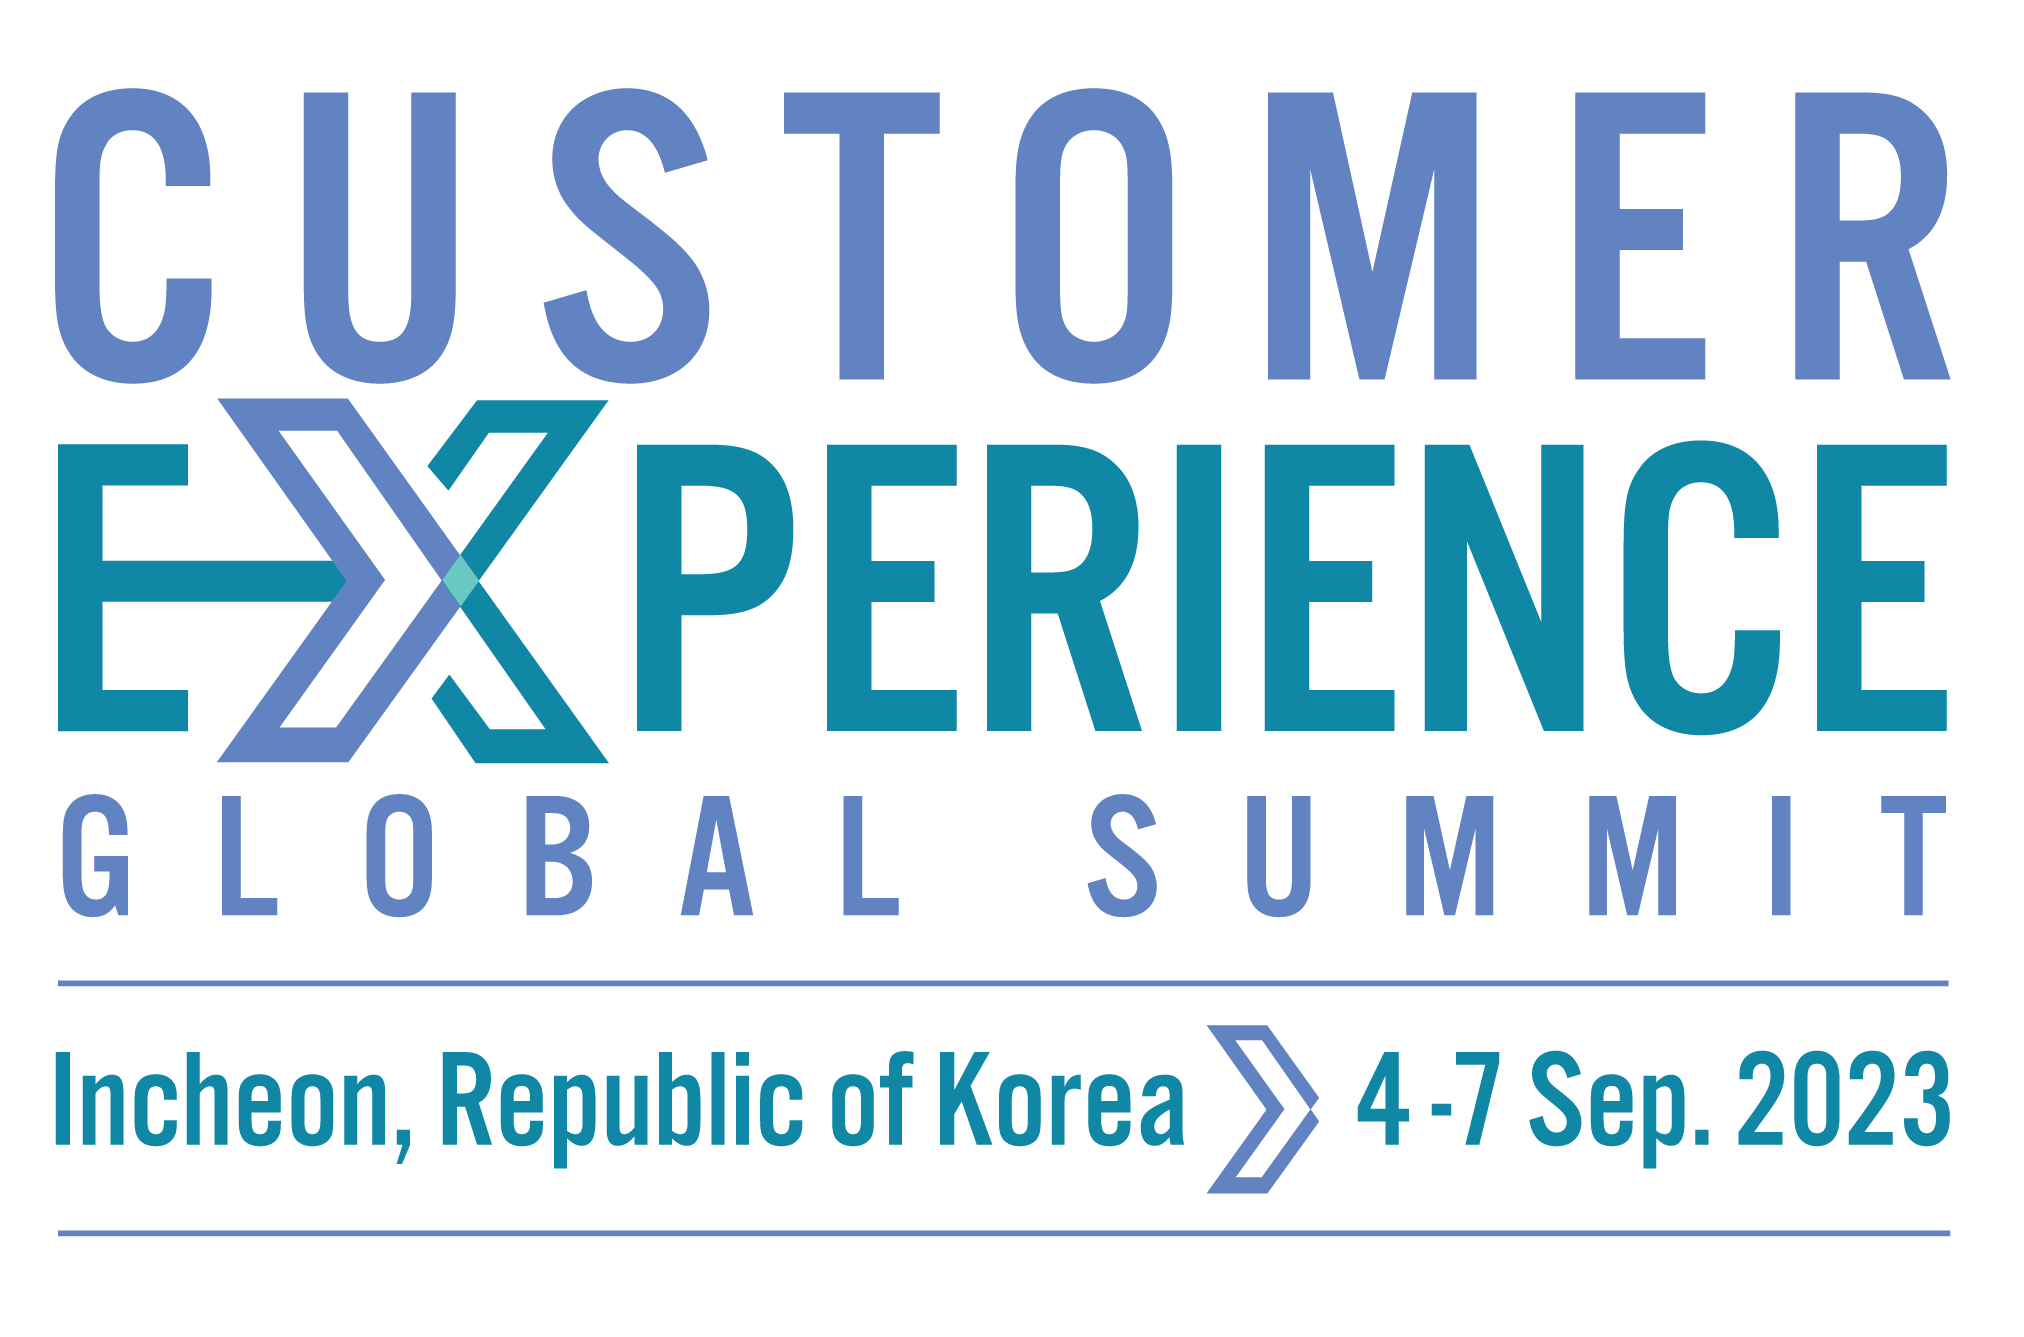 ACI Customer Experience Global Summit